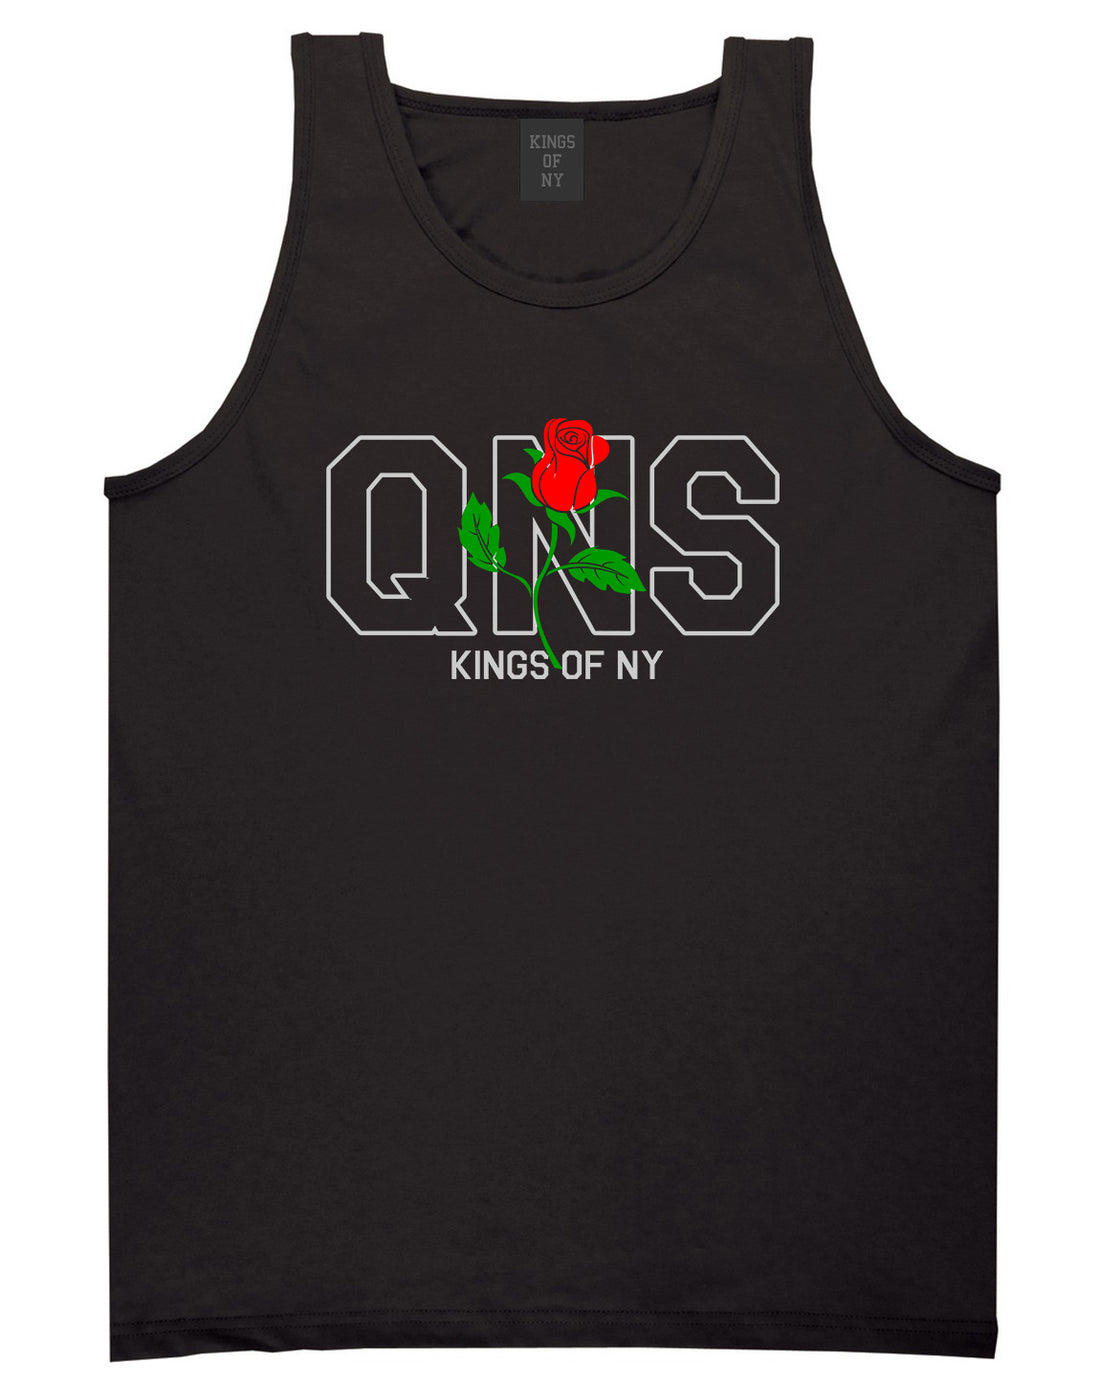 Rose QNS Queens Kings Of NY Mens Tank Top T-Shirt Black